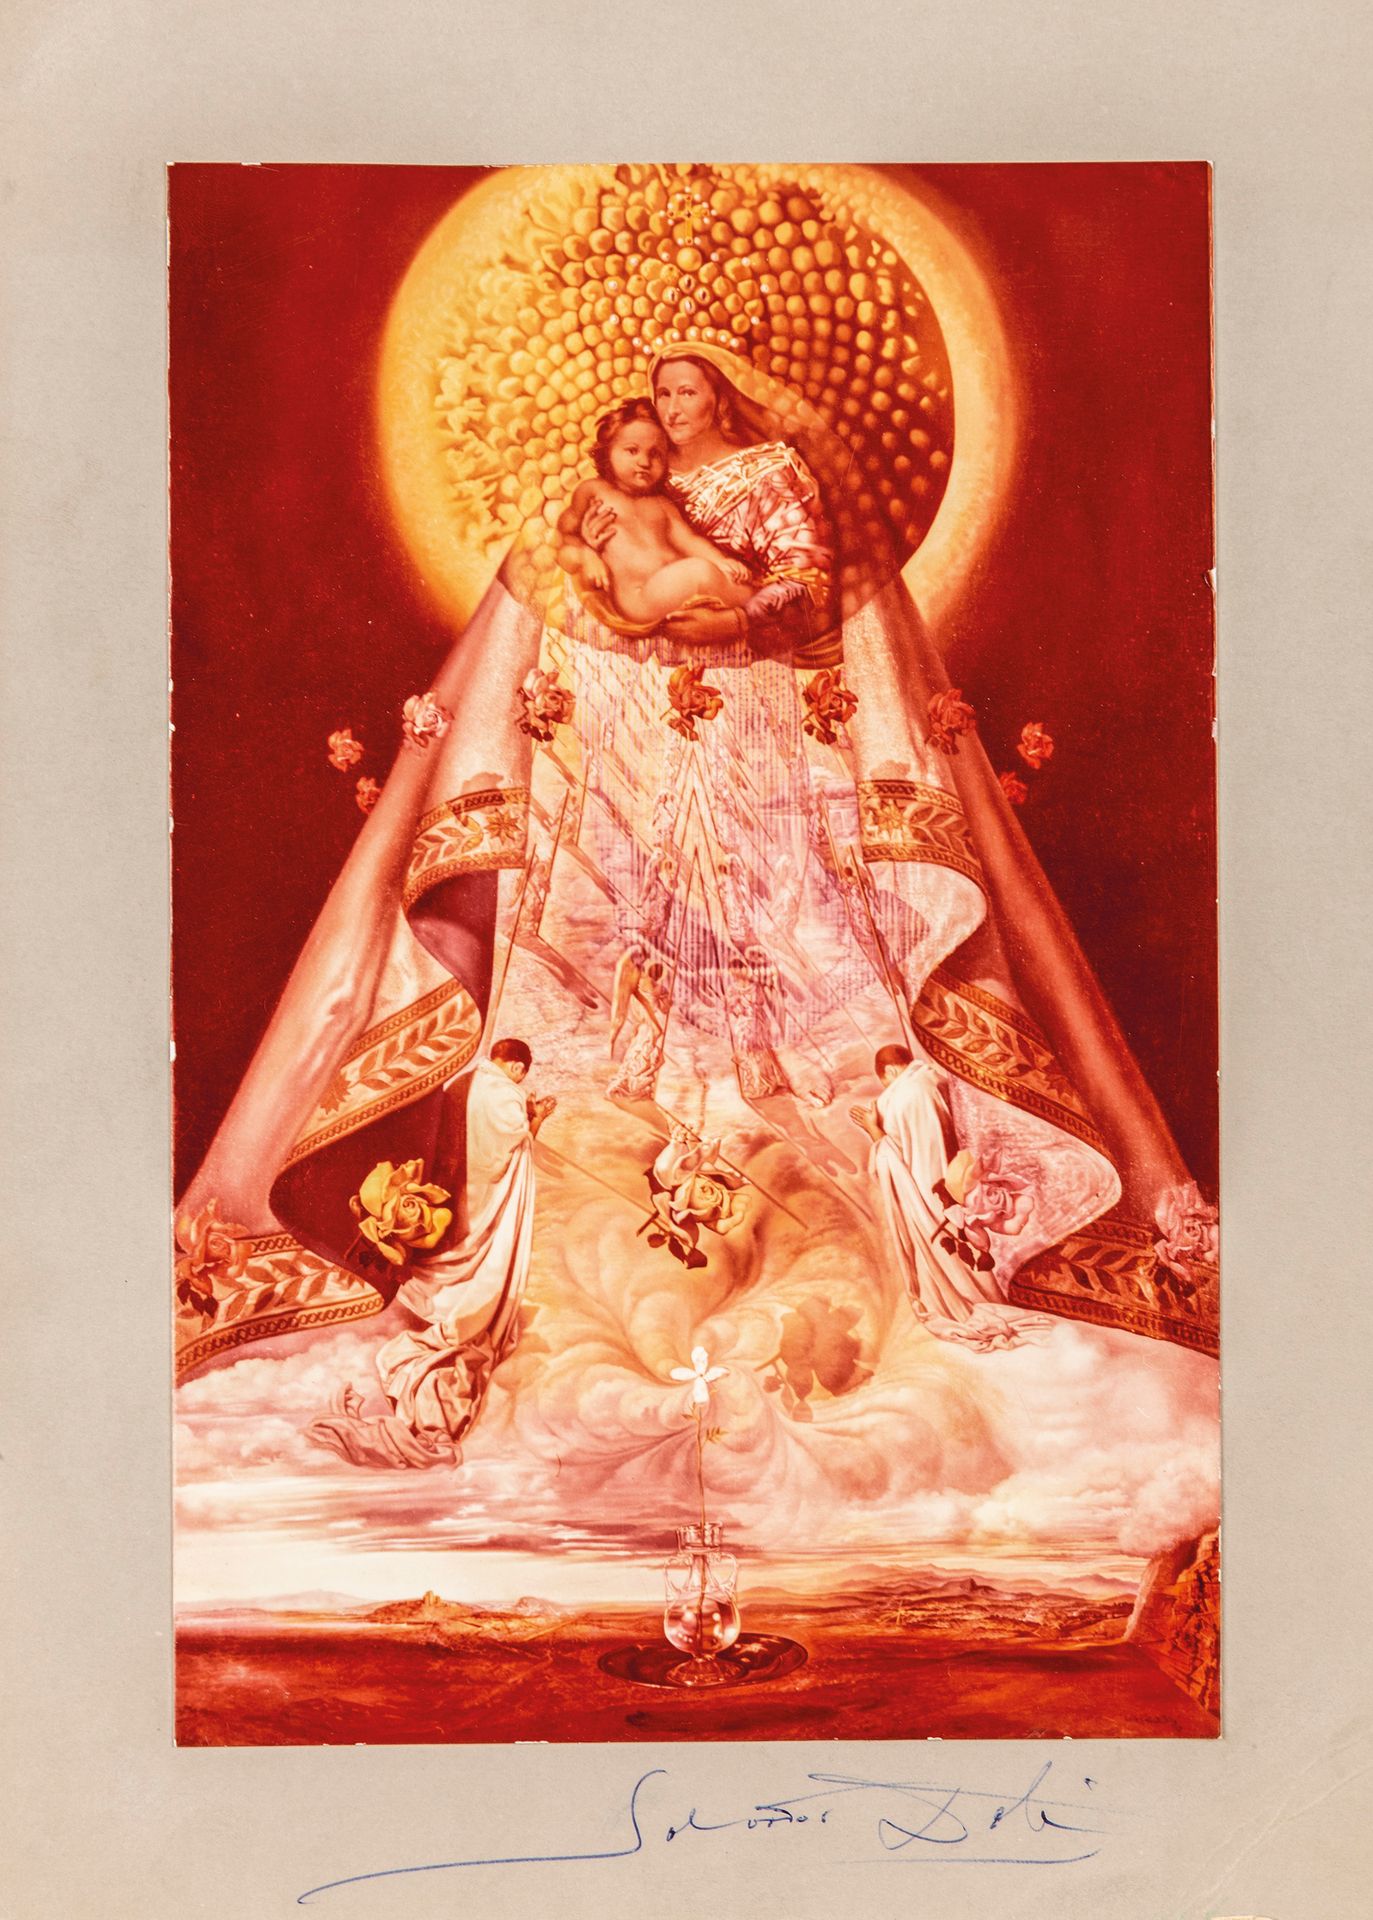 DALI I DOMENECH, SALVADOR (1904 - 1989) 萨尔瓦多达利 - 绘画《瓜达卢佩圣母》的照片，裱在纸板上，底部有萨尔瓦多达利的亲&hellip;